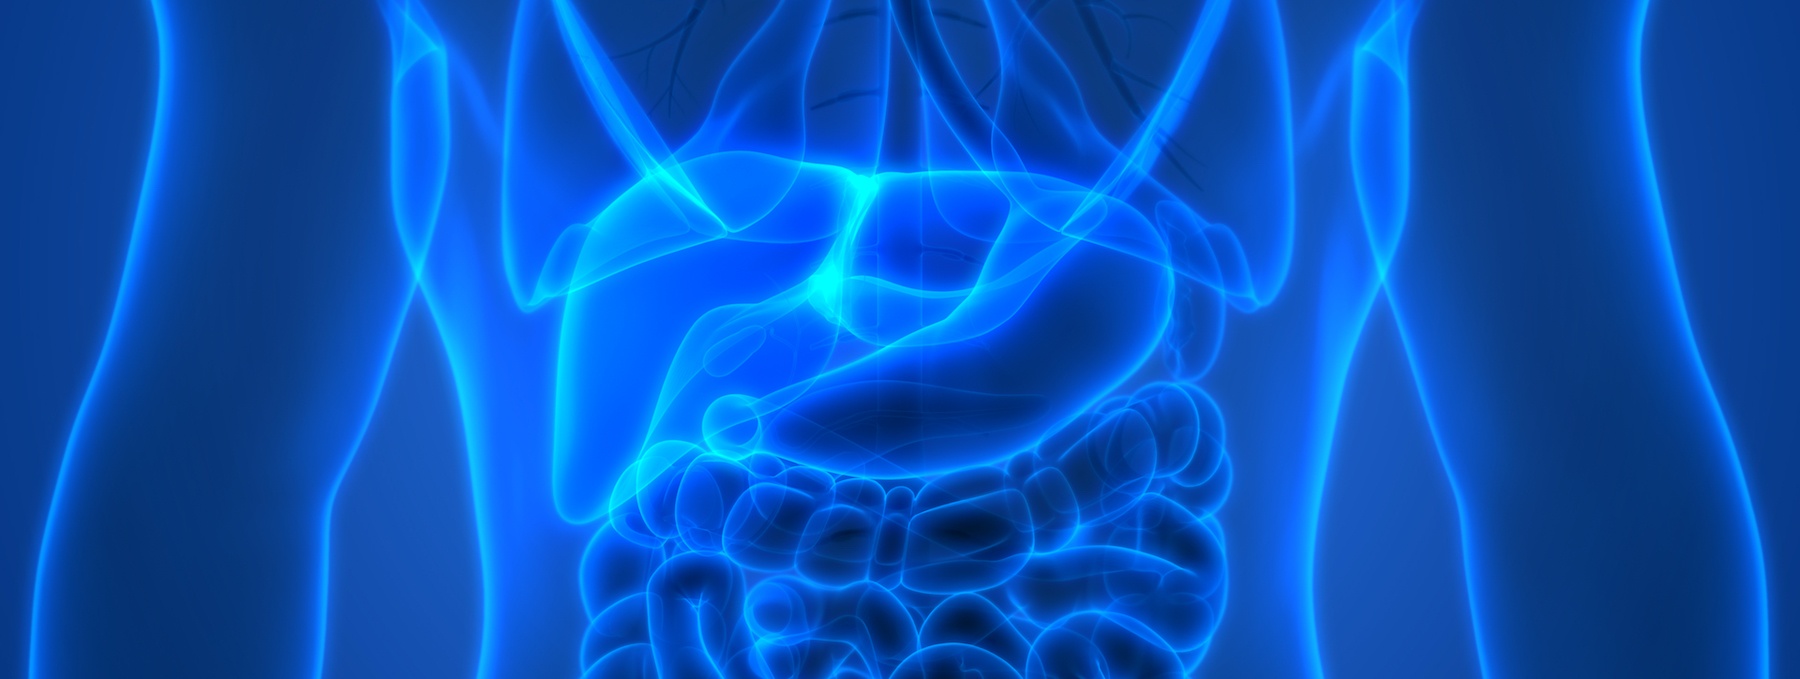 3D Illustration of Human Digestive System Liver Anatomy